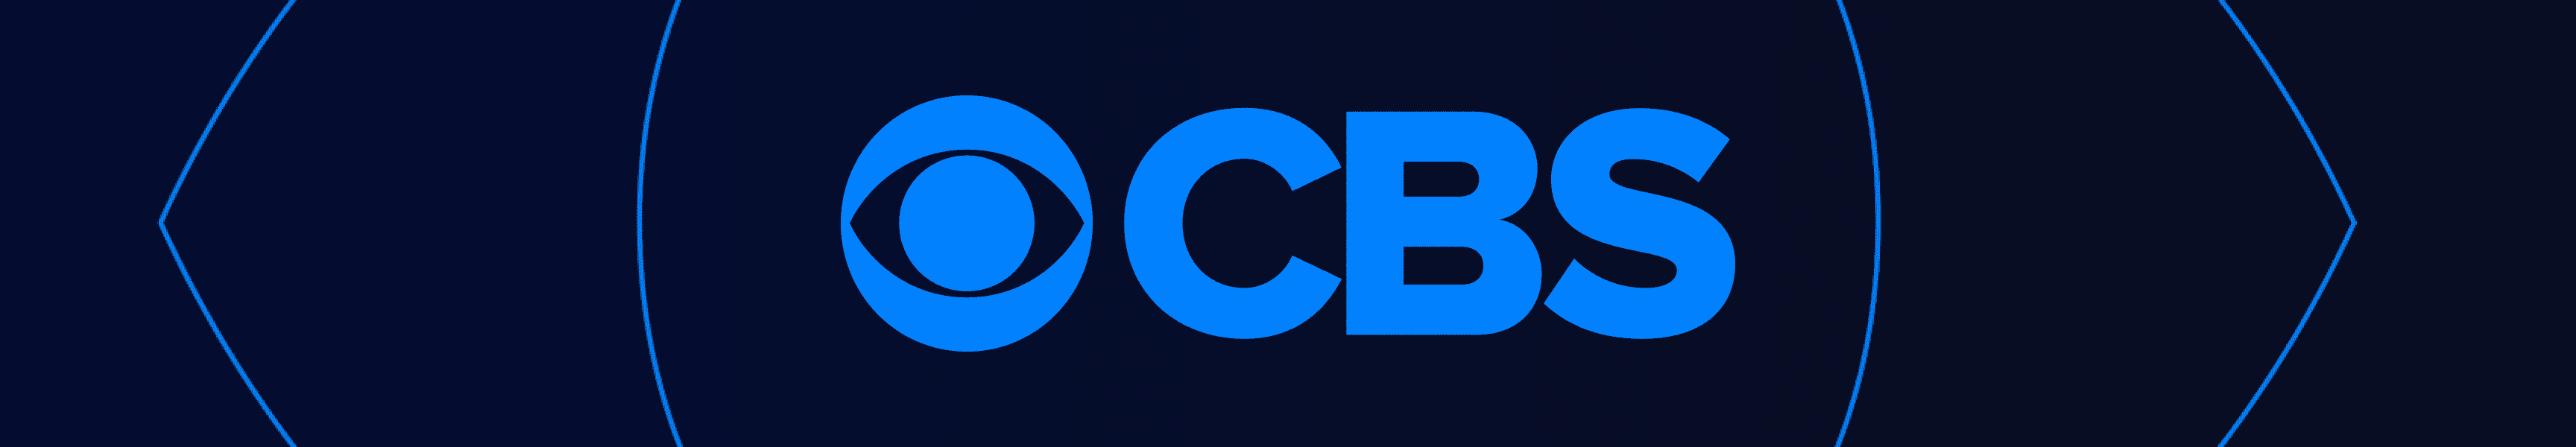 CBS Unterhaltung Standfiguren